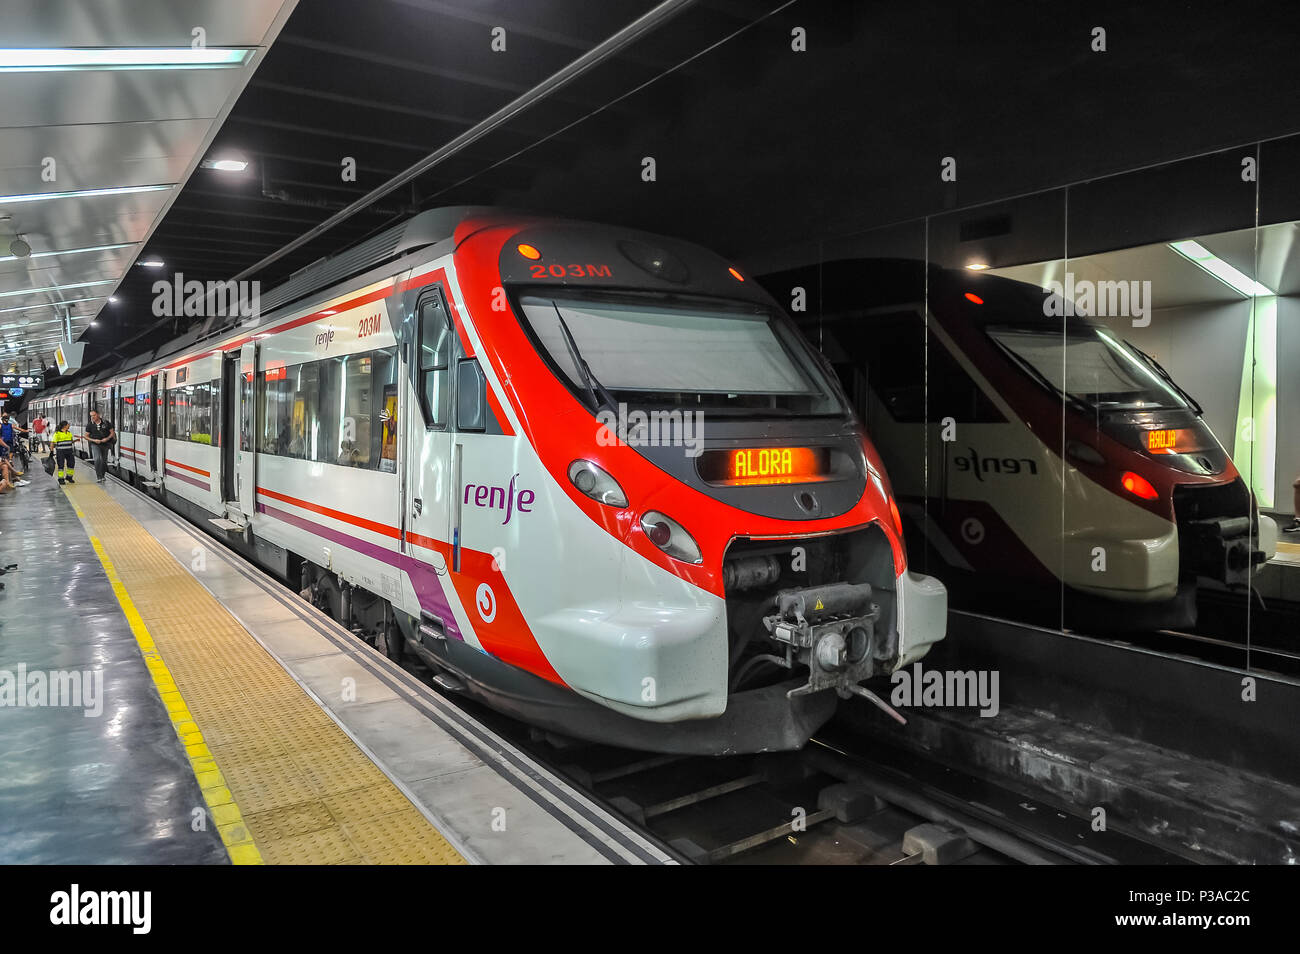 Train in Malaga Underground Railway Station, Malaga, Spain. Stock Photo